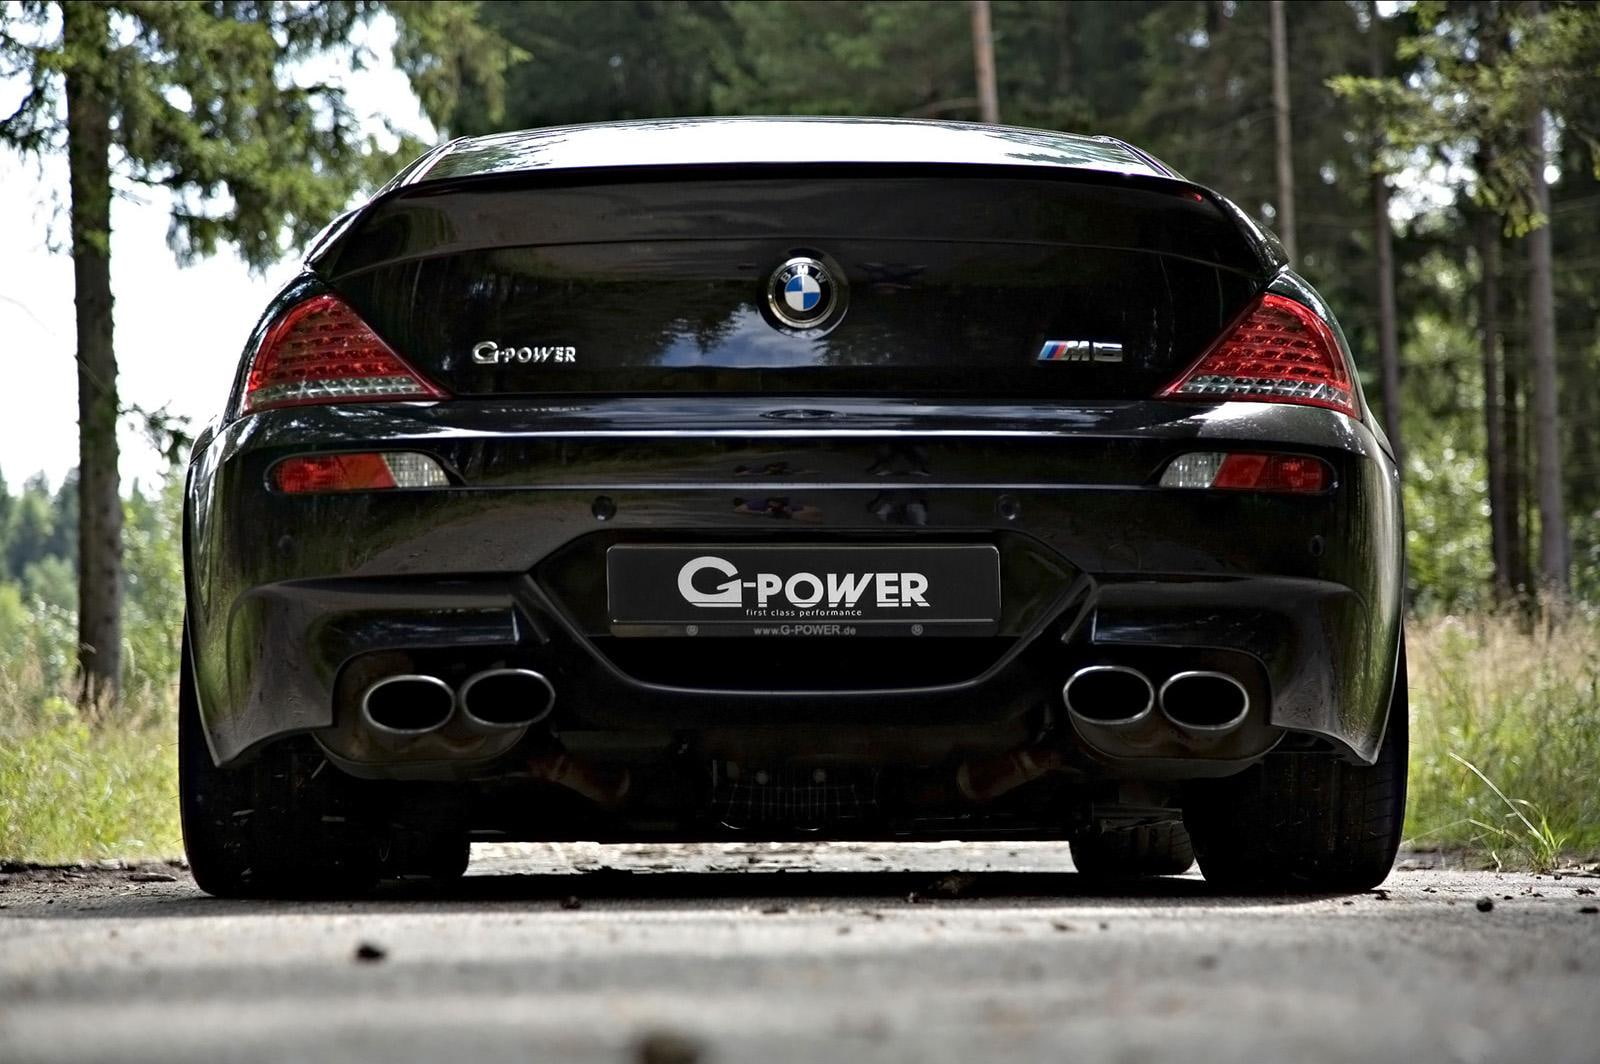 BMW G-Power M6 Hurricane CS, 2011 g power bmw m6 hurricane rr